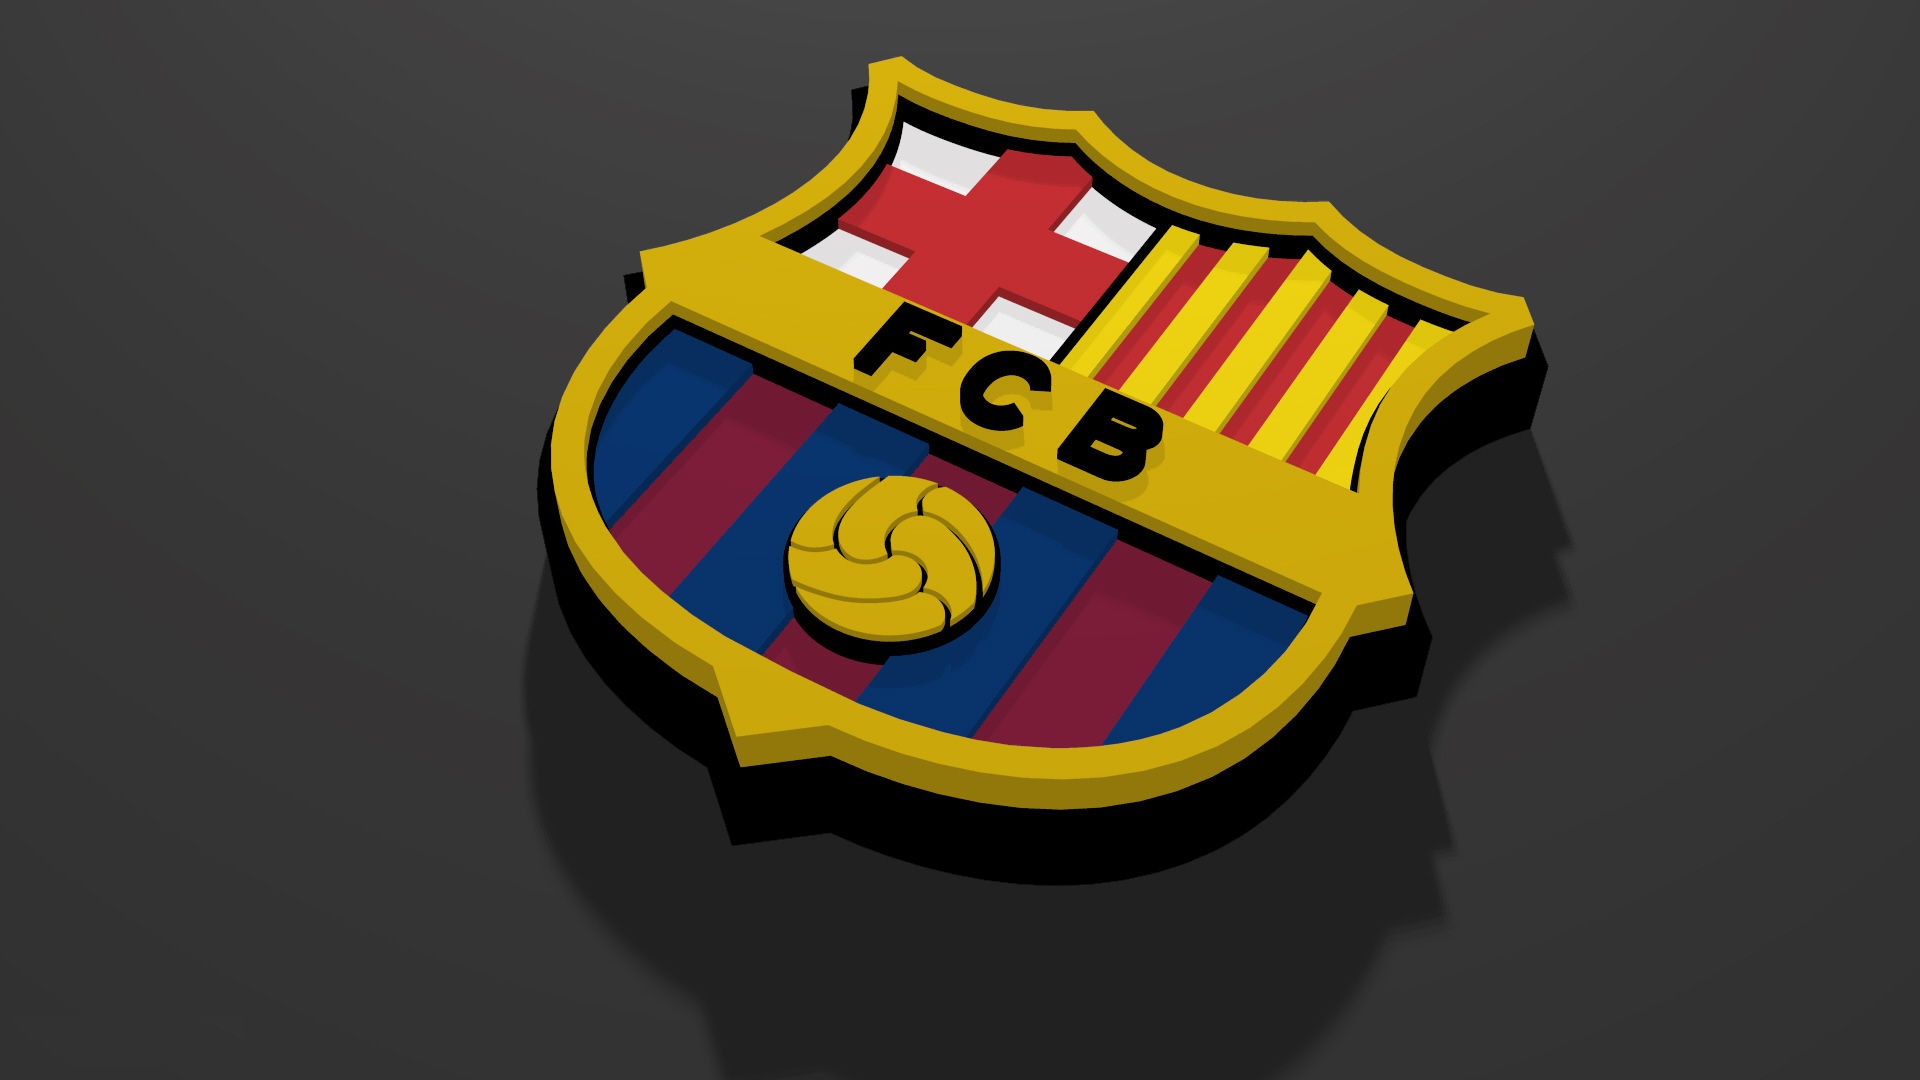 FC Barcelona NEWS